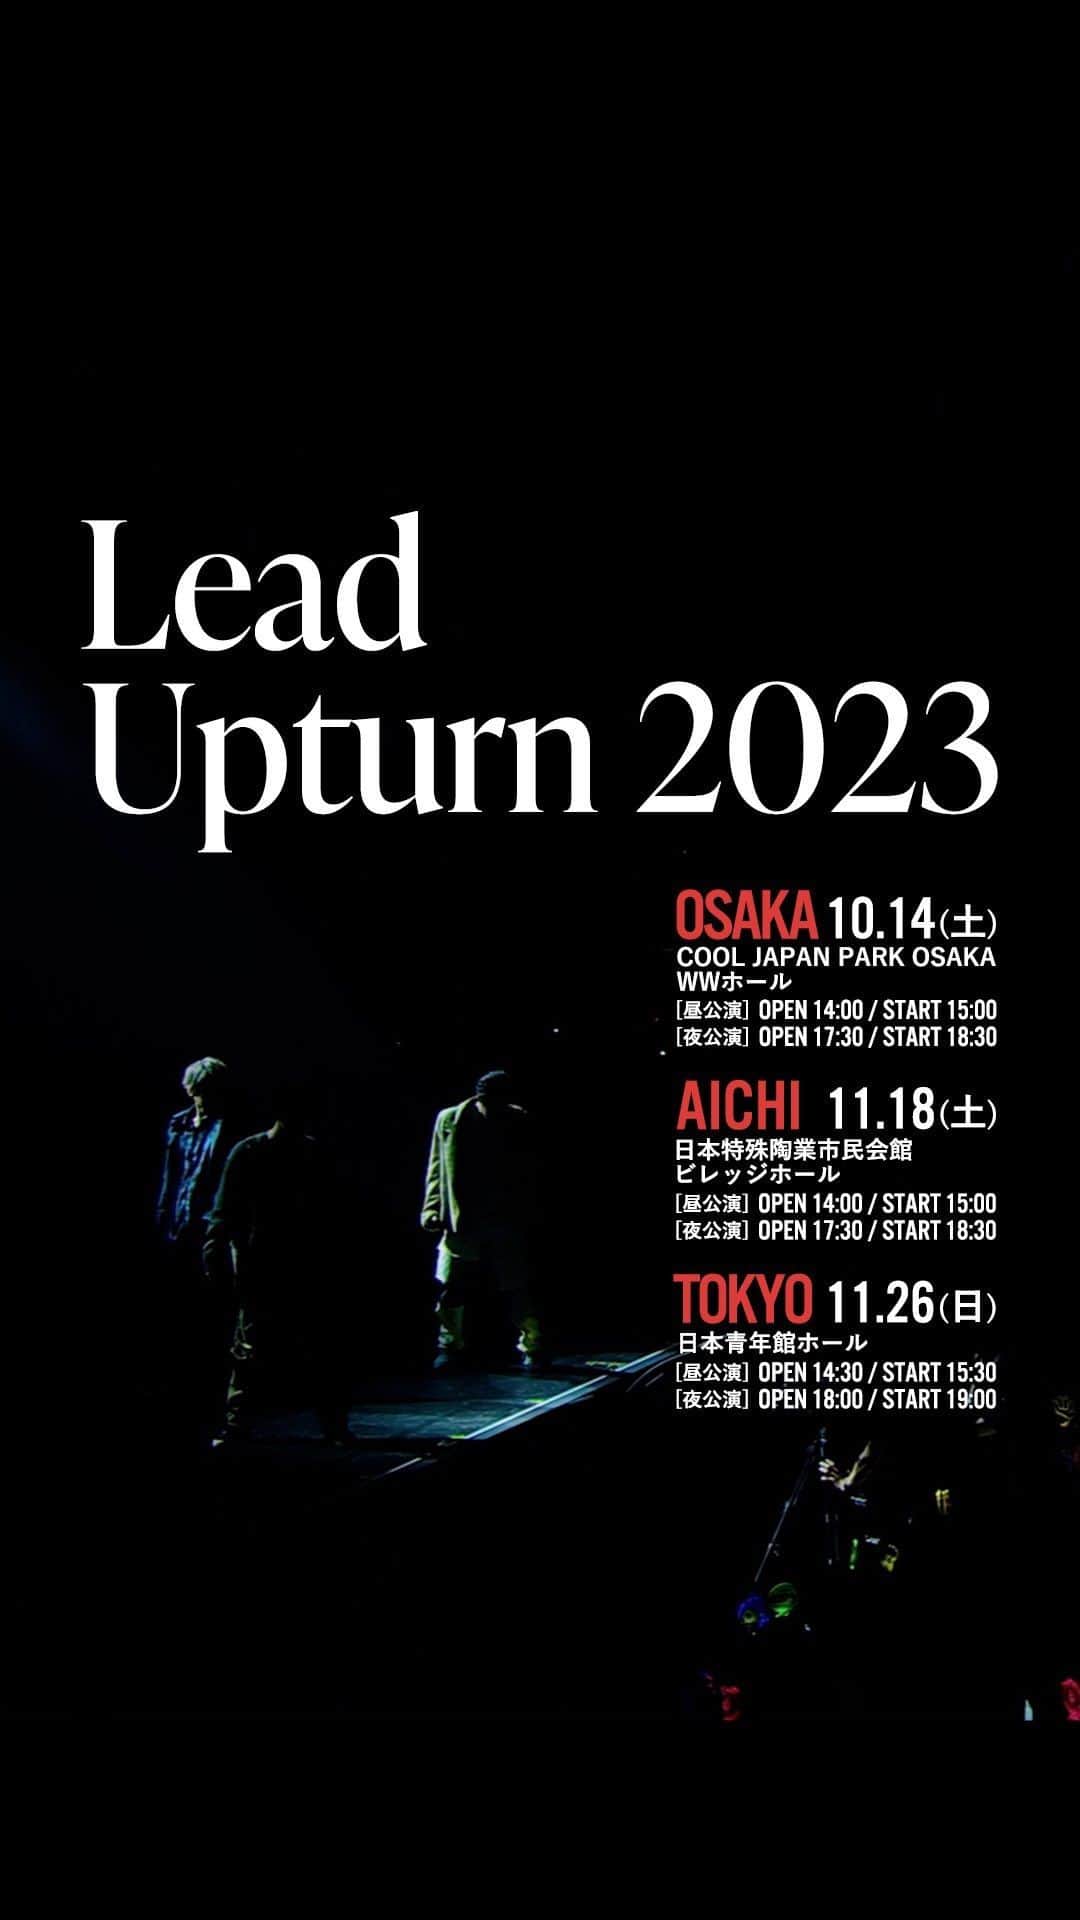 Lead【公式】のインスタグラム：「@lead_staff  _______________  Lead “Upturn 2023” 開催決定 _______________  ▪︎日程・会場 10.14(土)  [大阪]COOL JAPAN PARK OSAKA WWホール 【昼公演】14:00開場/15:00開演 【夜公演】17:30開場/18:30開演  11/18(土) [愛知]⽇本特殊陶業市⺠会館ビレッジホール 【昼公演】14:00開場/15:00開演 【夜公演】17:30開場/18:30開演  11/26(日) [東京]⽇本⻘年館ホール 【昼公演】14:30開場/15:30開演 【夜公演】18:00開場/19:00開演  🎫オフィシャルFC”Leaders”先行チケット受付 2023.7.31(月)22:00〜8.20(日)23:59  #Lead #Lead_upturn2023」